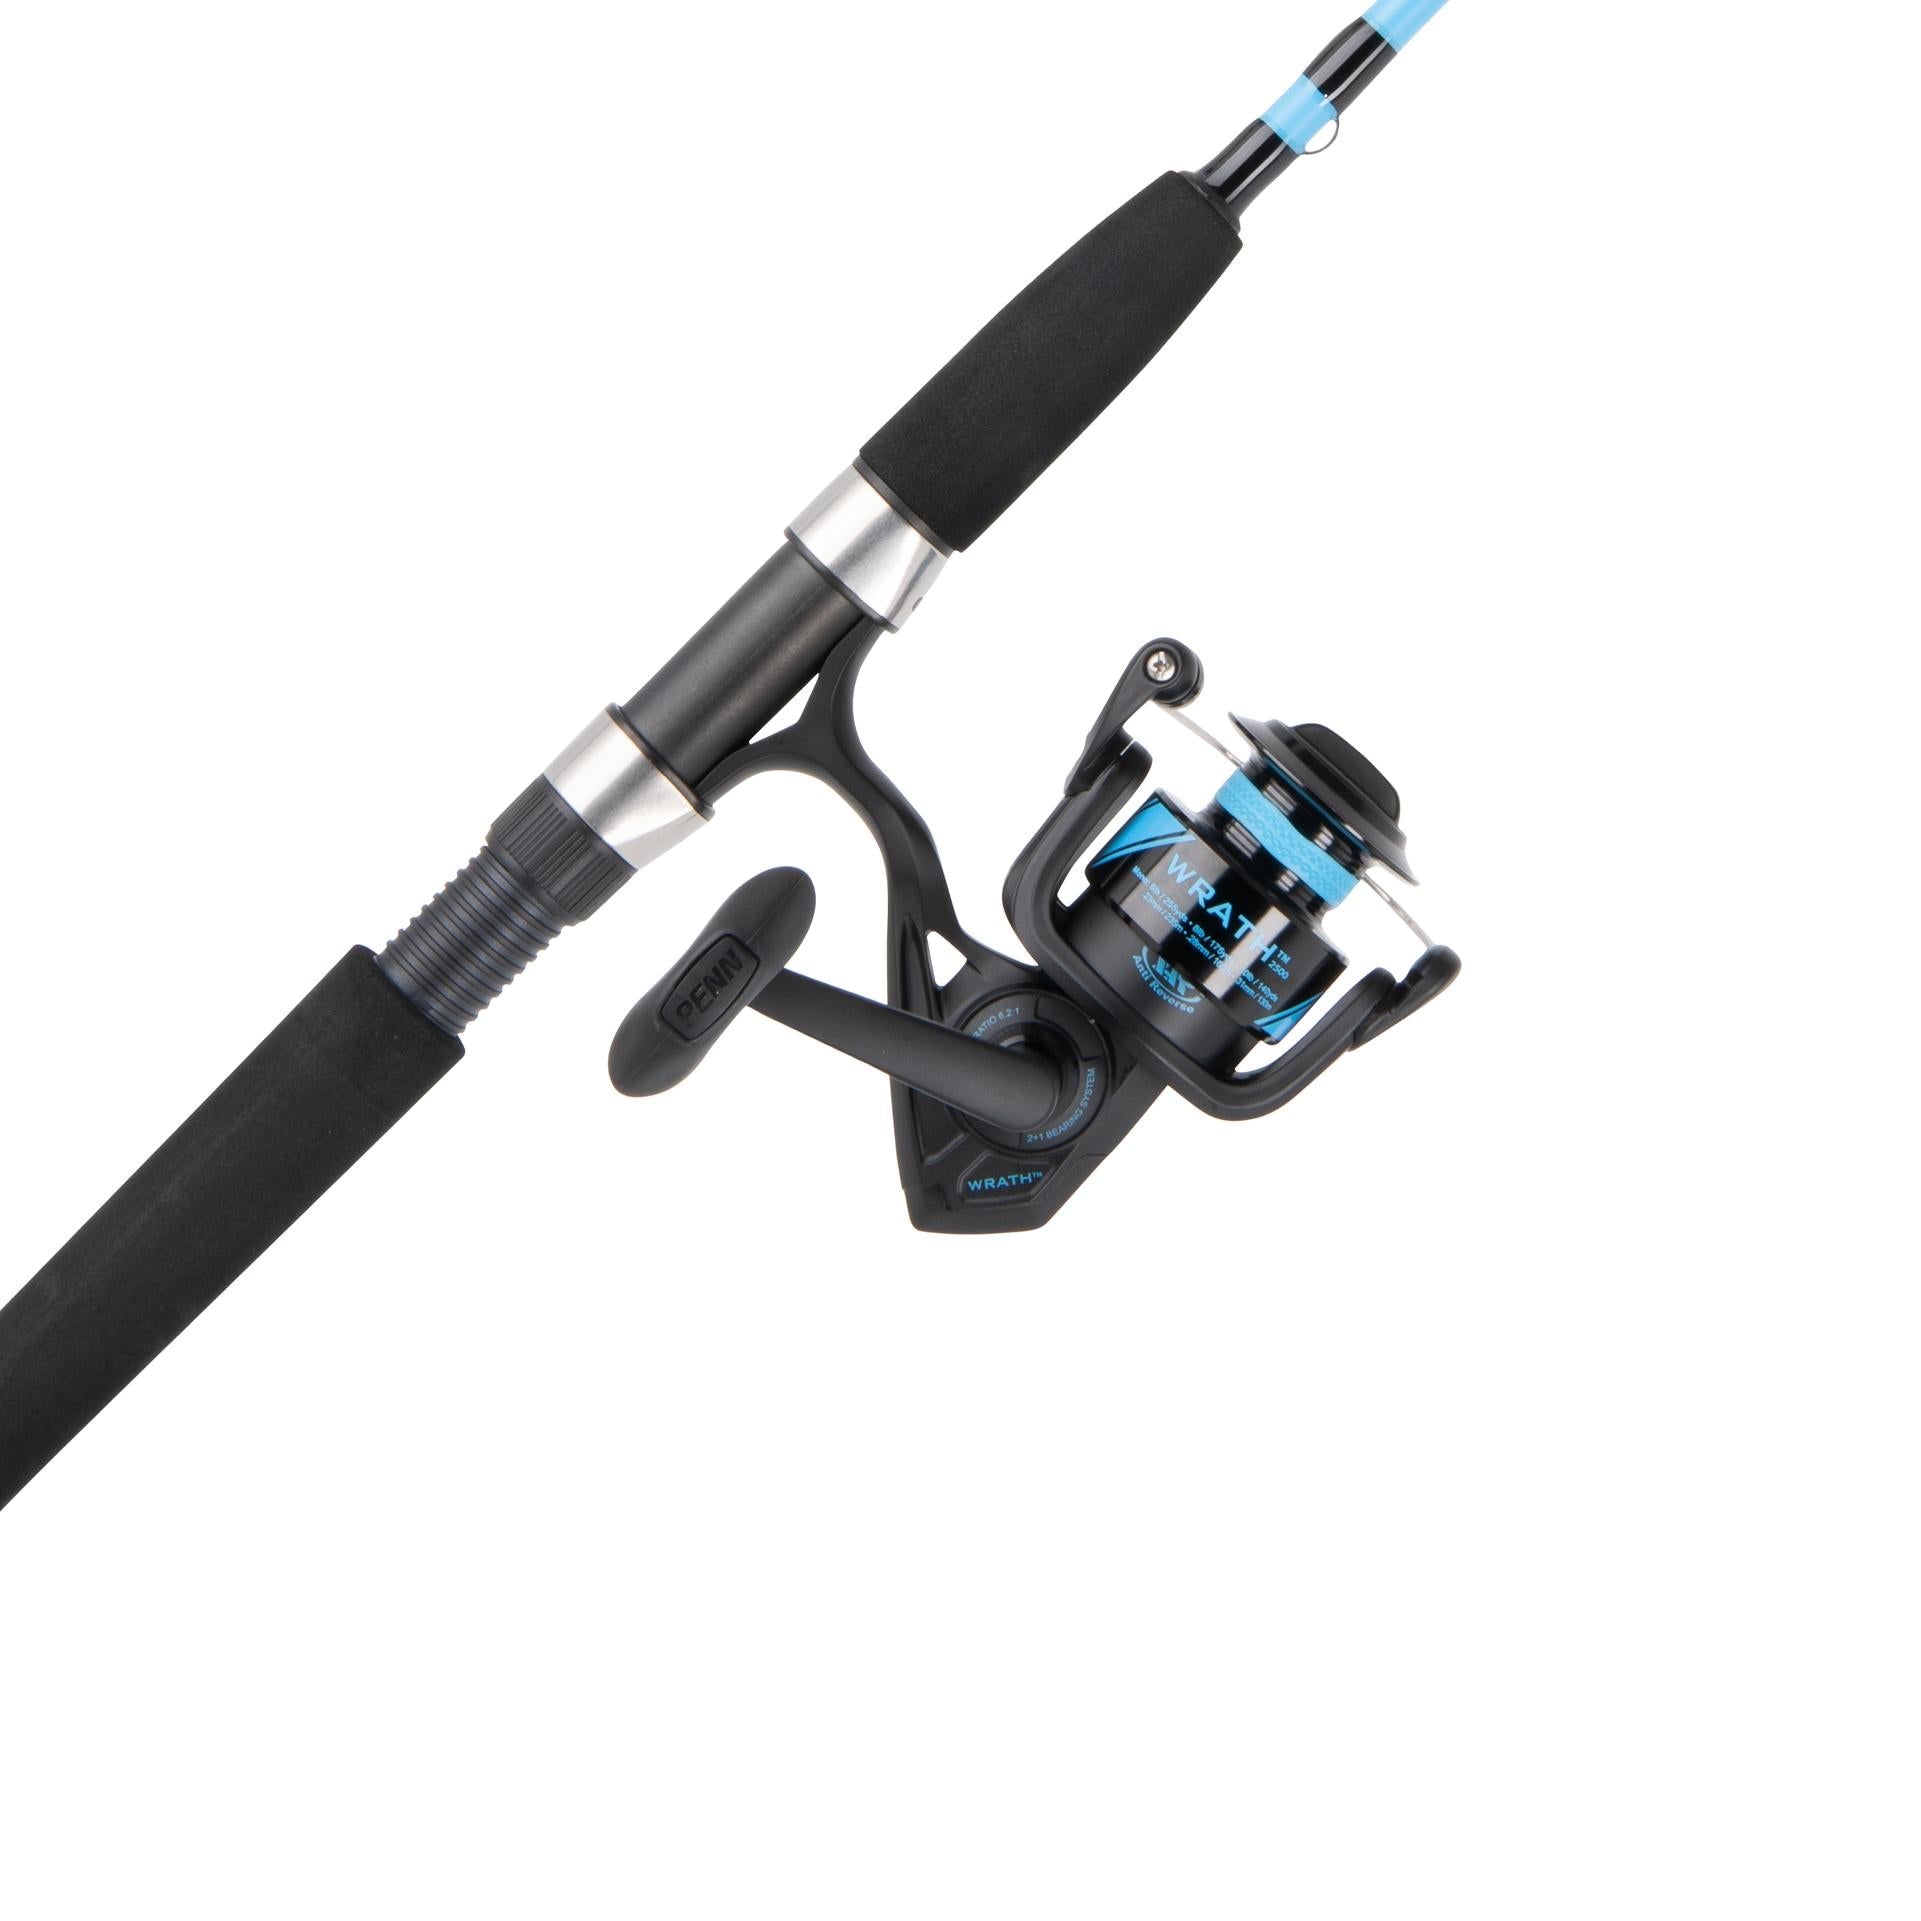  Fishing Rod & Reel Combos - Surf Fishing / Fishing Rod